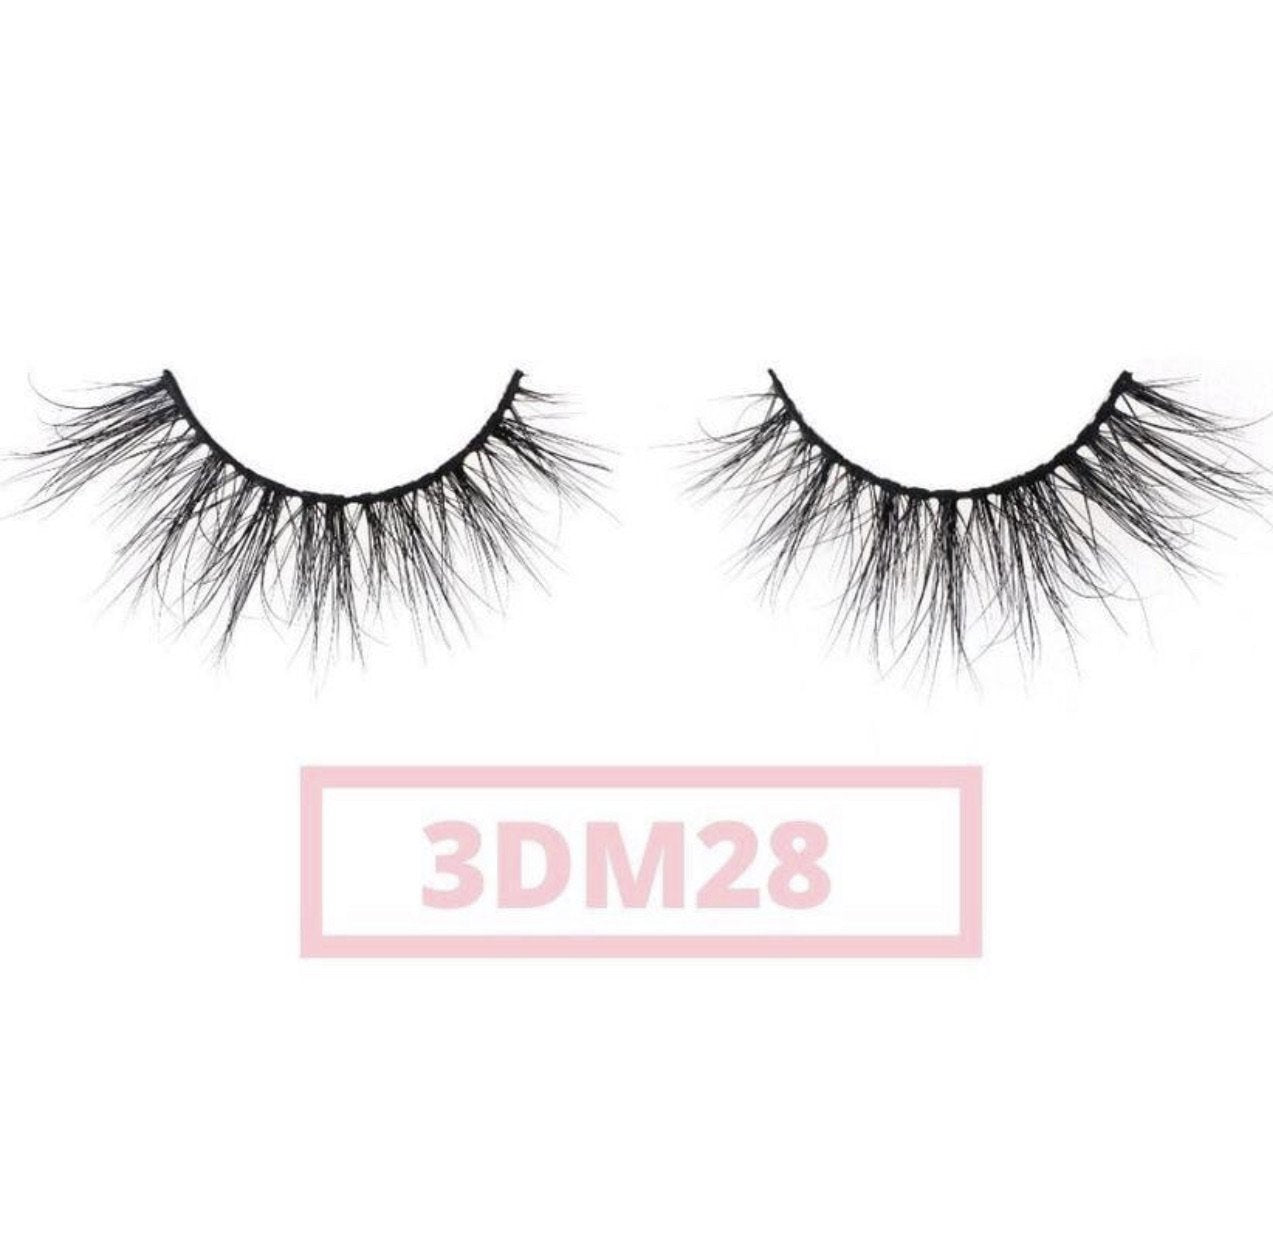 Eyelashe number 3DM28